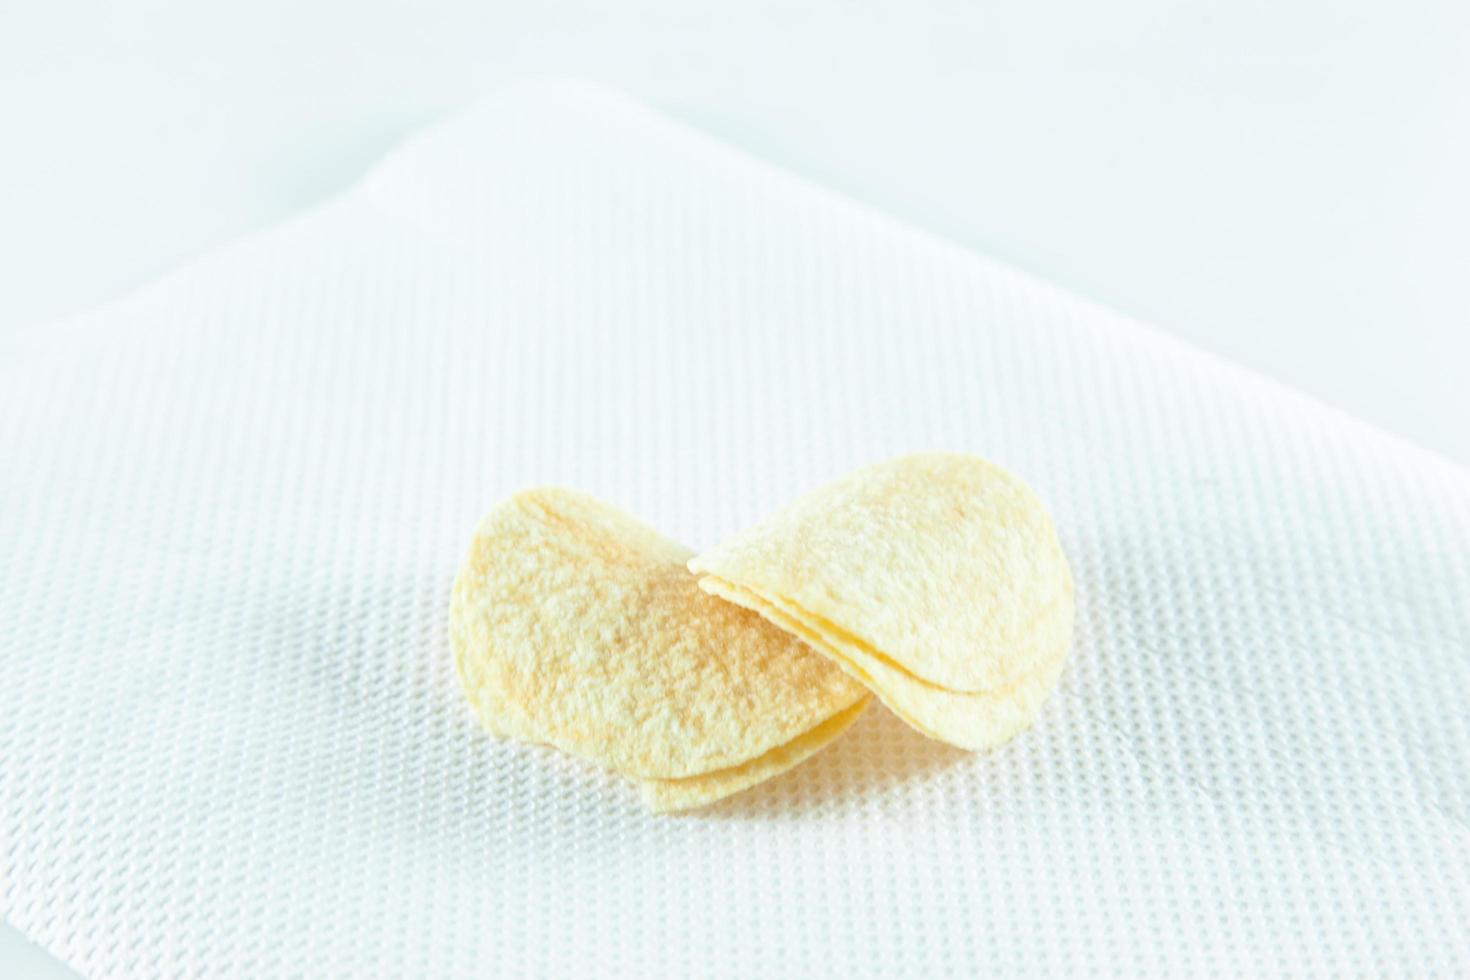 Potato chips on tissue photo